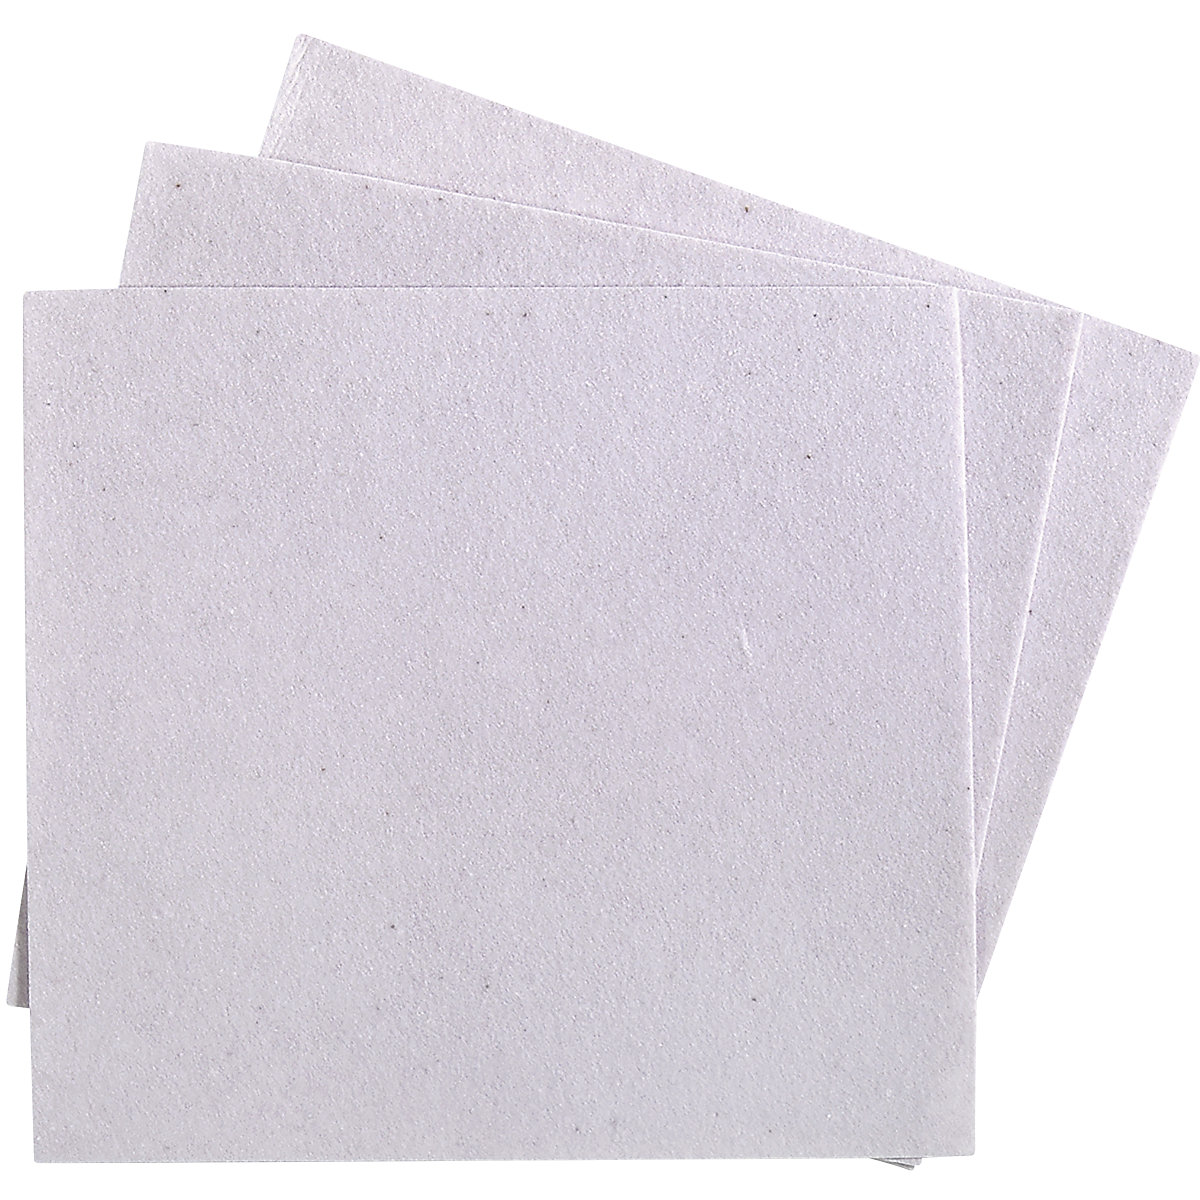 HazMat absorbent sheeting mat for chemicals, neutralises acids - PIG